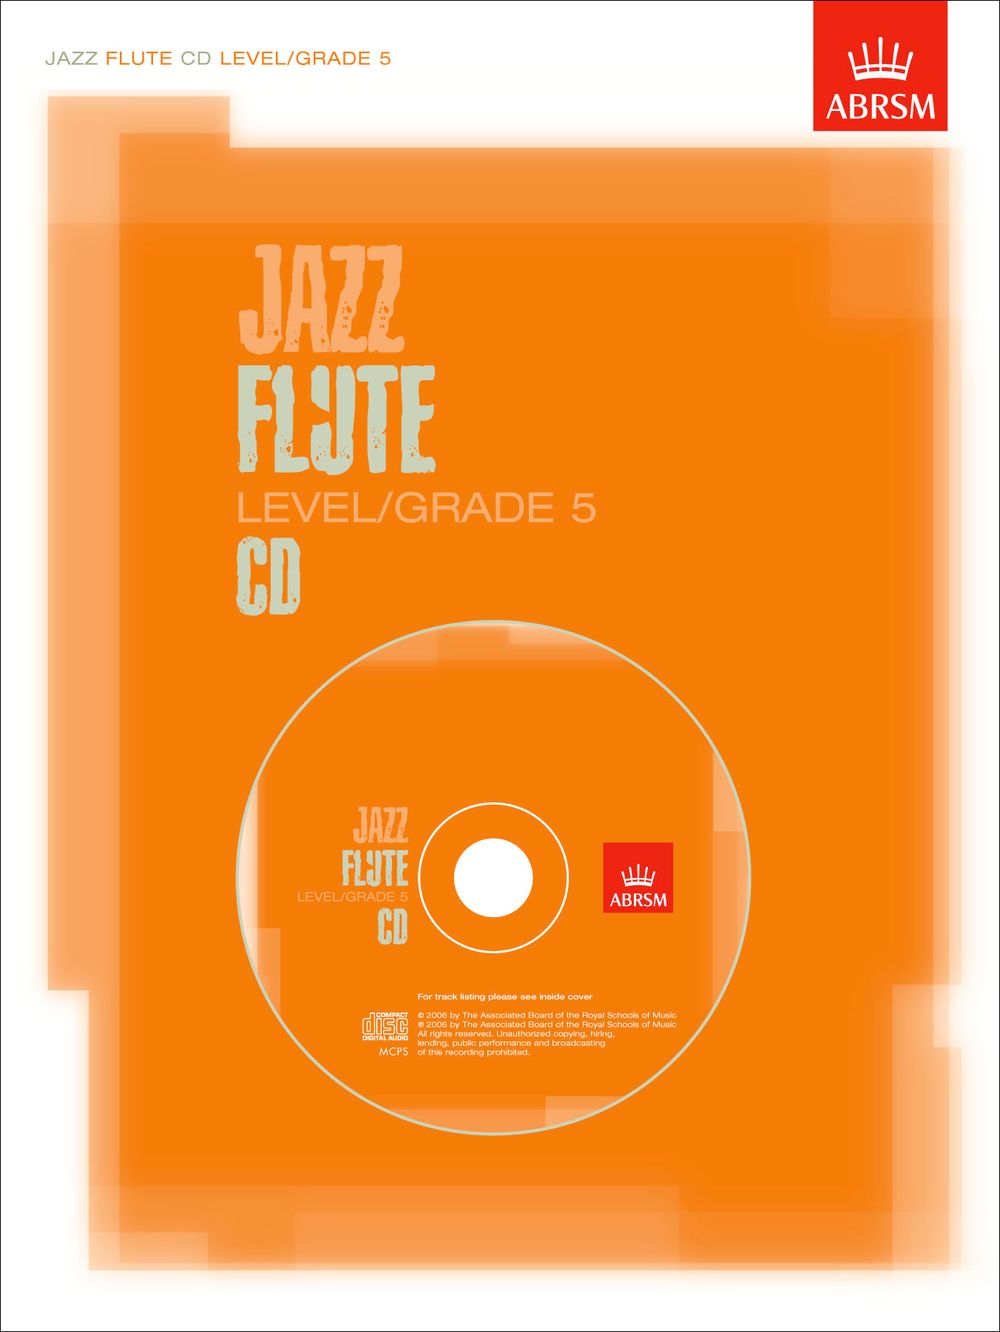 Jazz Flute CD Level/Grade 5: Flute: Recorded Performance